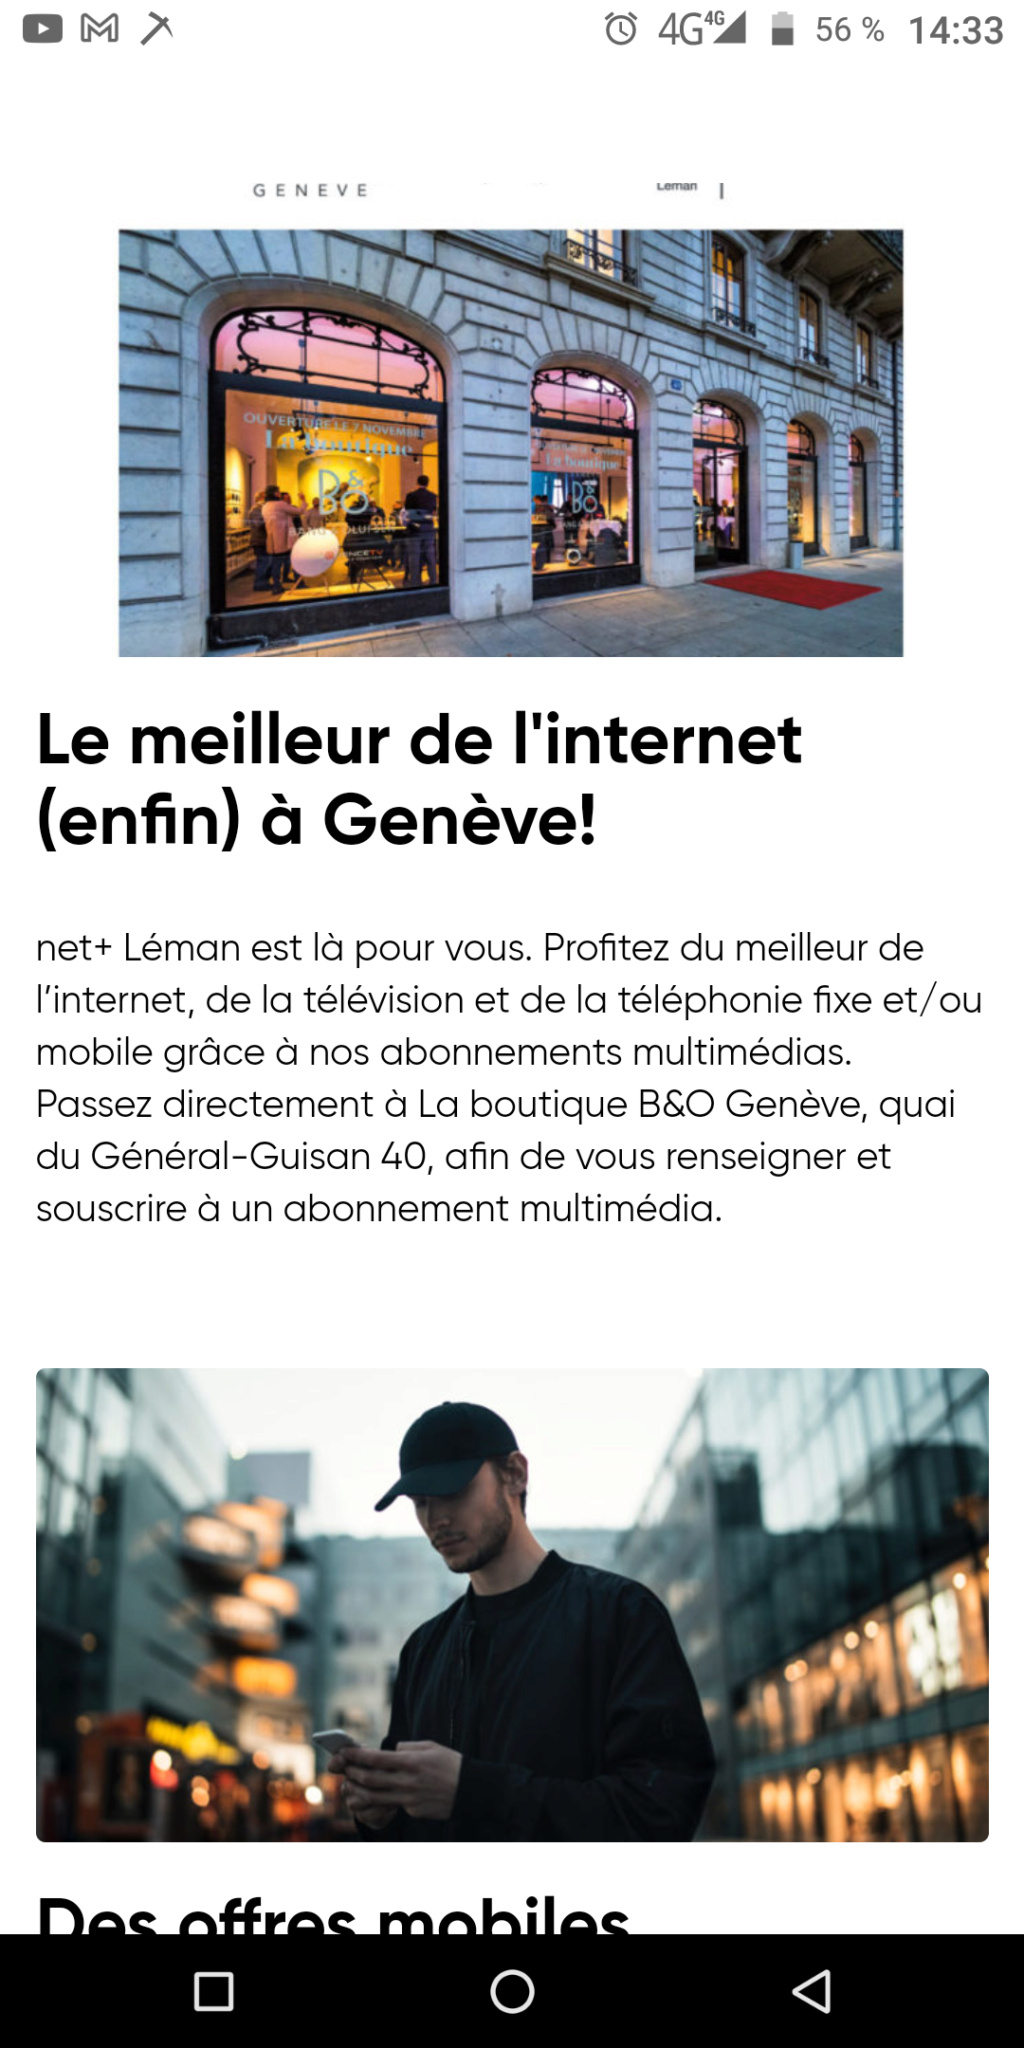 Netplus a Genève Screen10